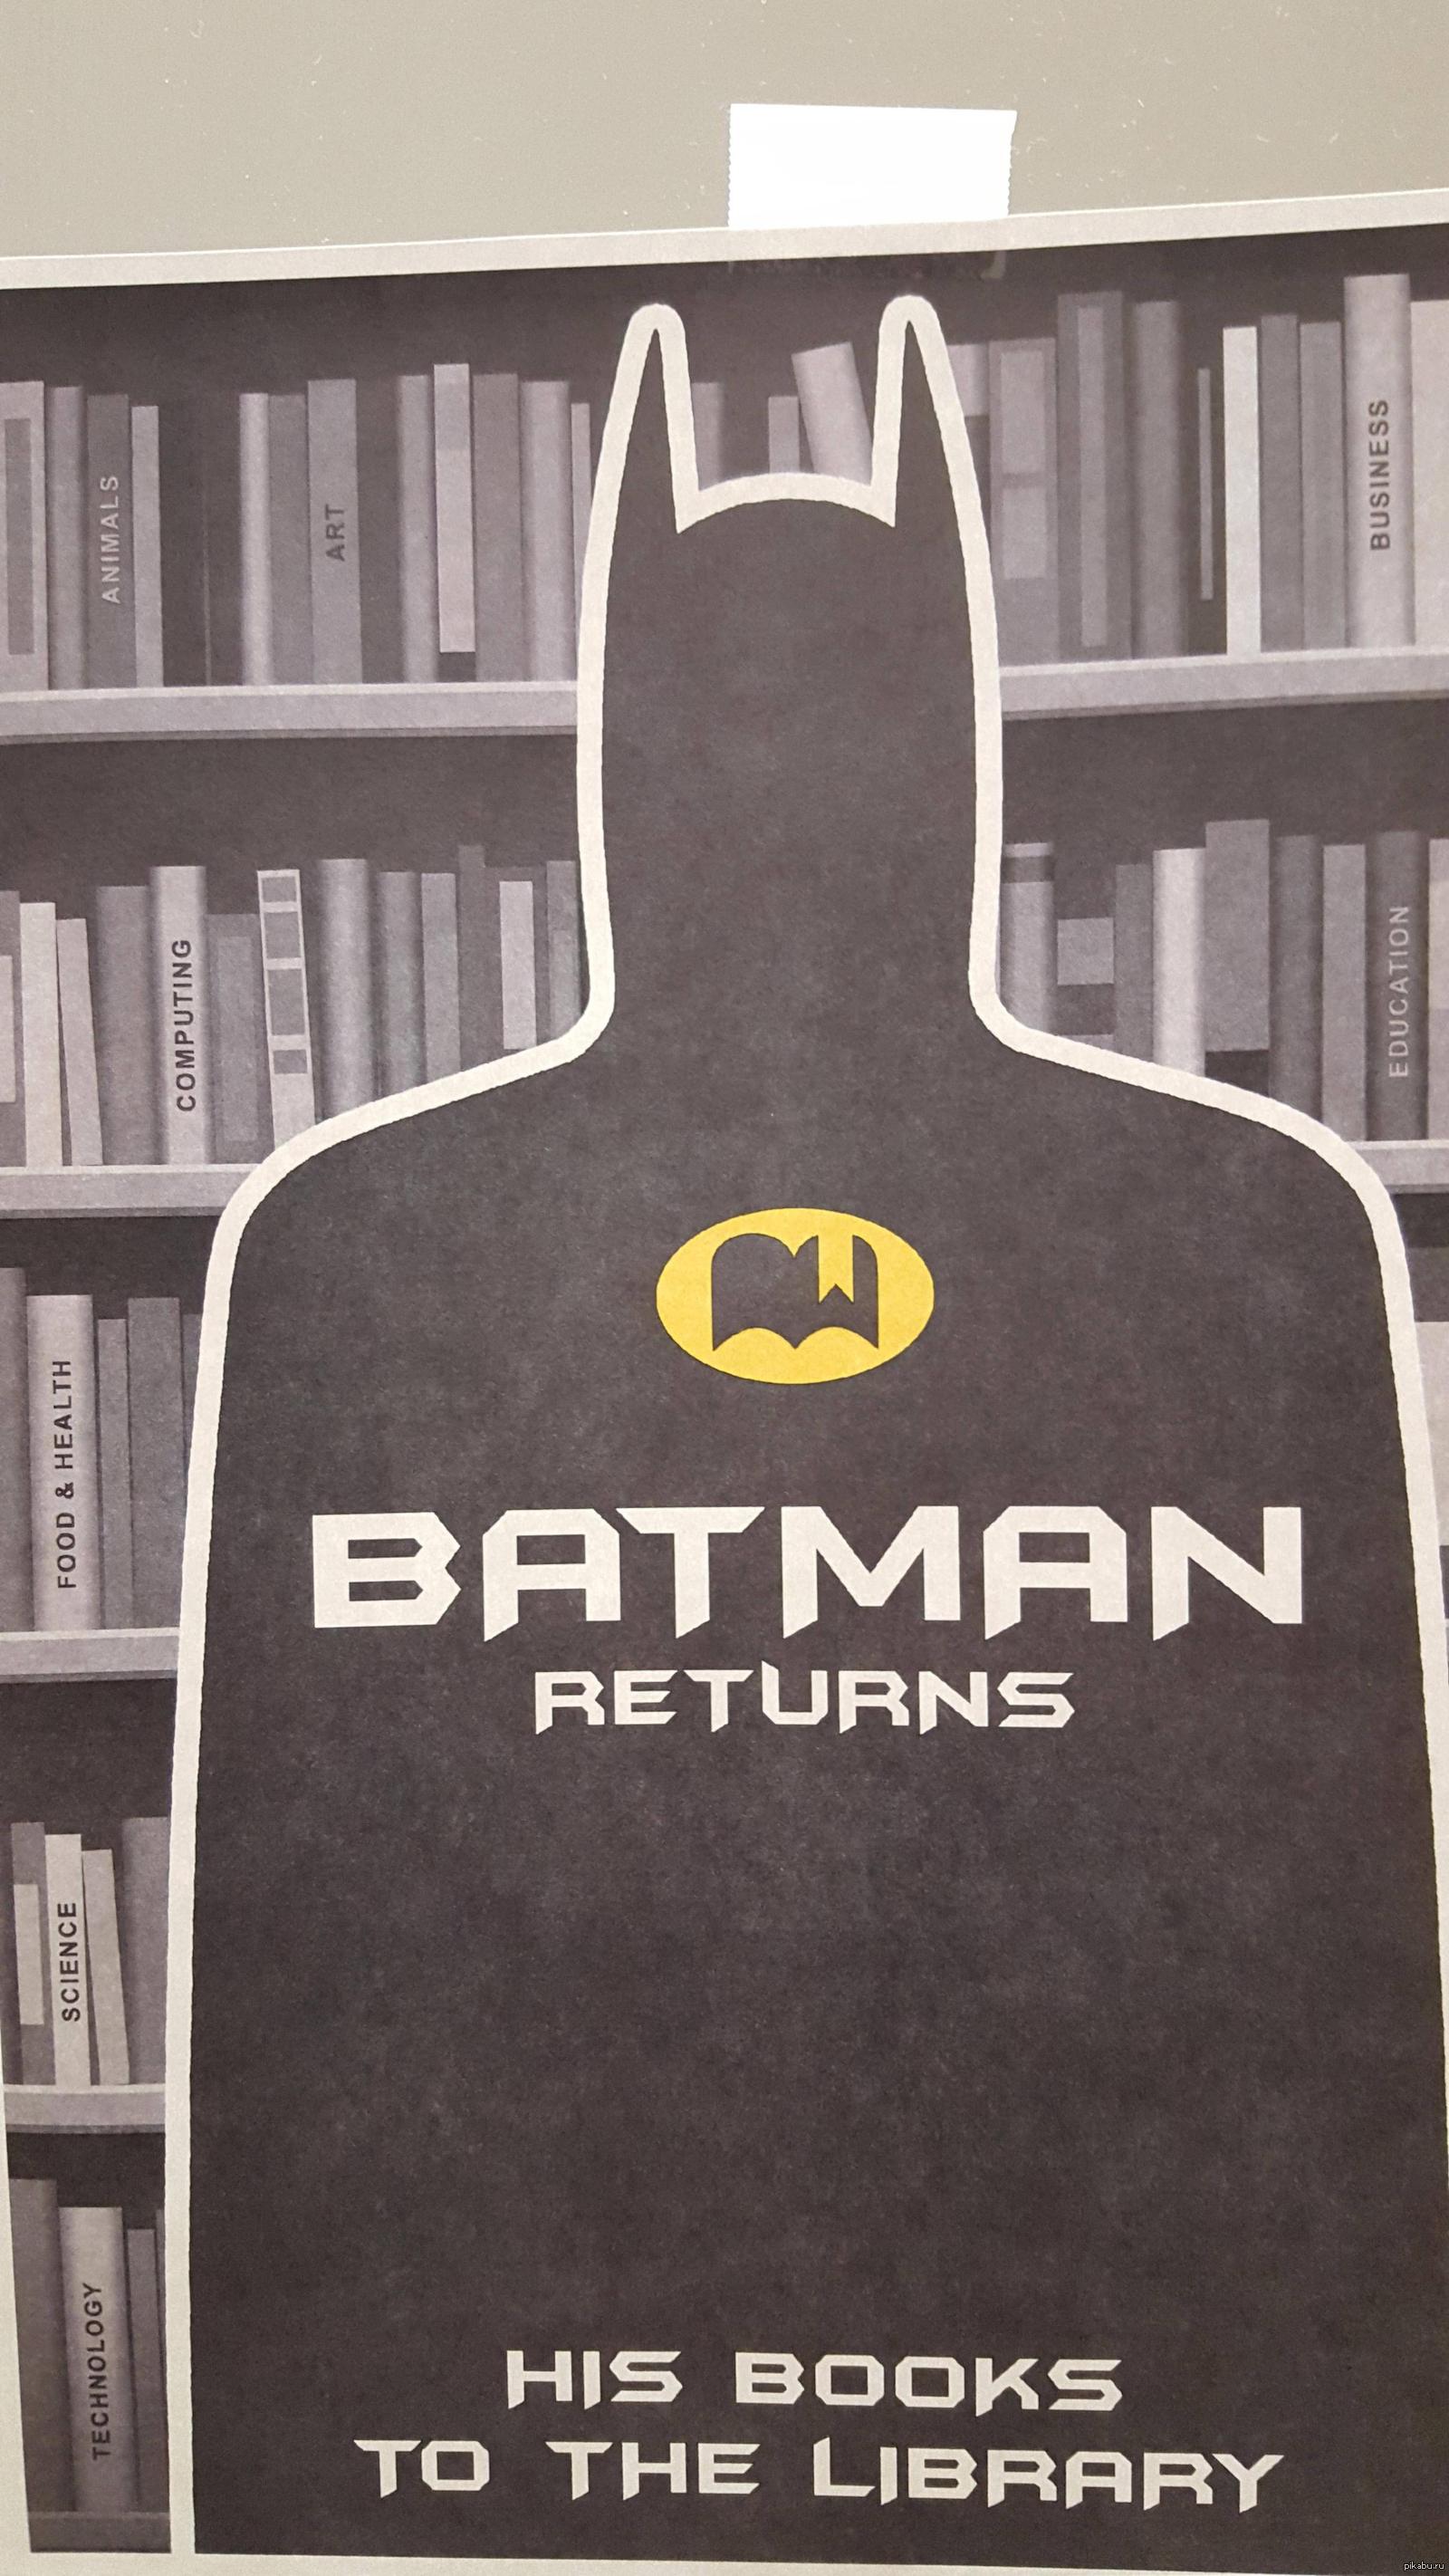 The books return to the library. Бэтмен в библиотеке. Batman Returns книга. Библиотека в Бэтмене. The book must Return to the Library.